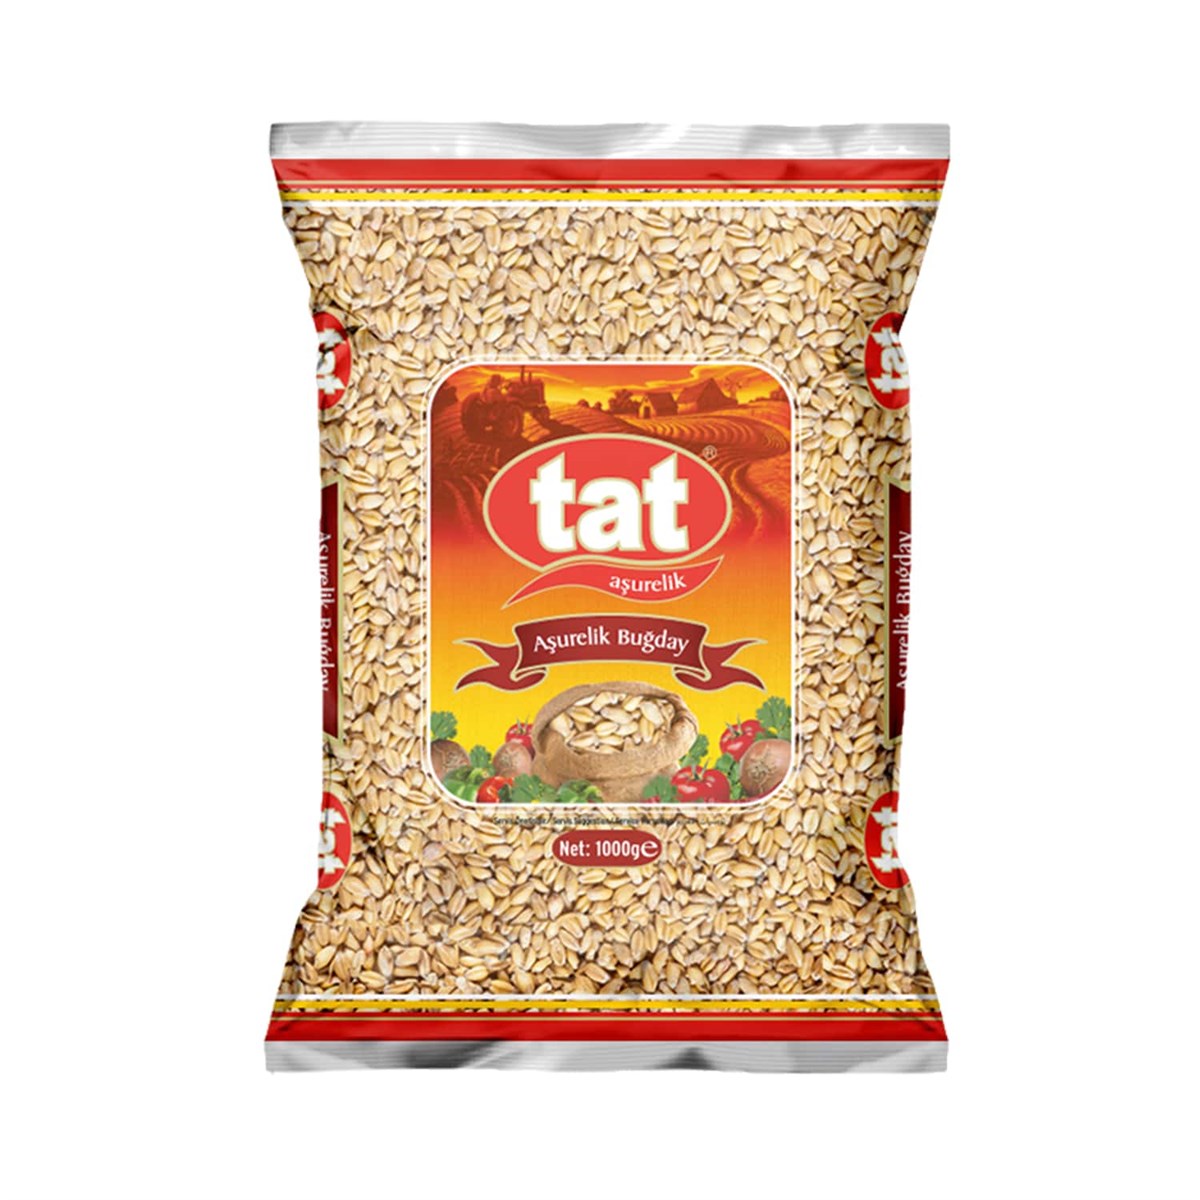 Tat Asurelik Bugday / Shelled Wheat  1 Kg